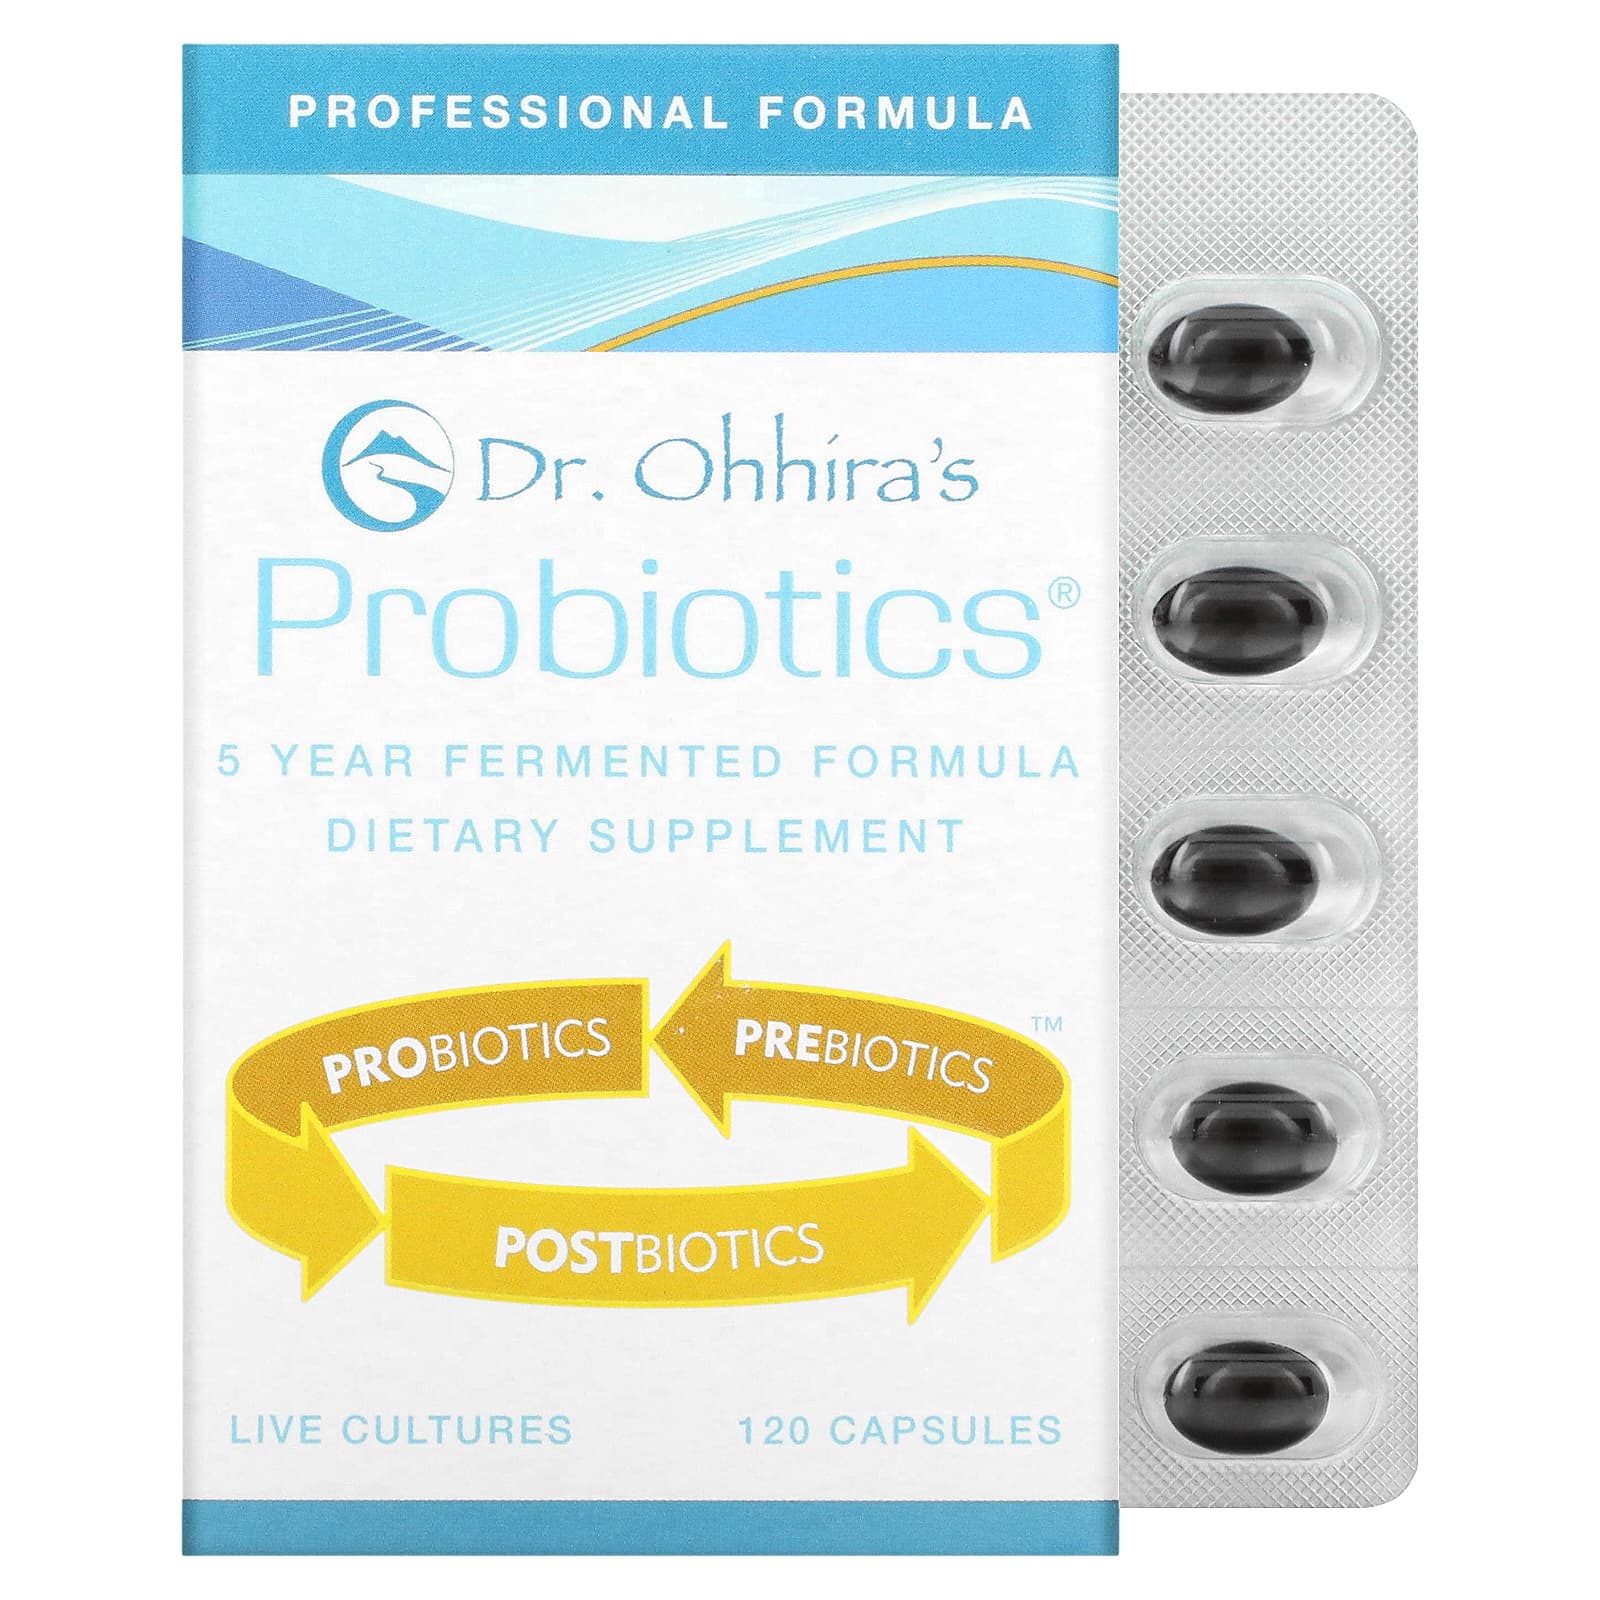 цена Dr. Ohhira's Essential Formulas Inc. Professional Formula Probiotics 120 капсул